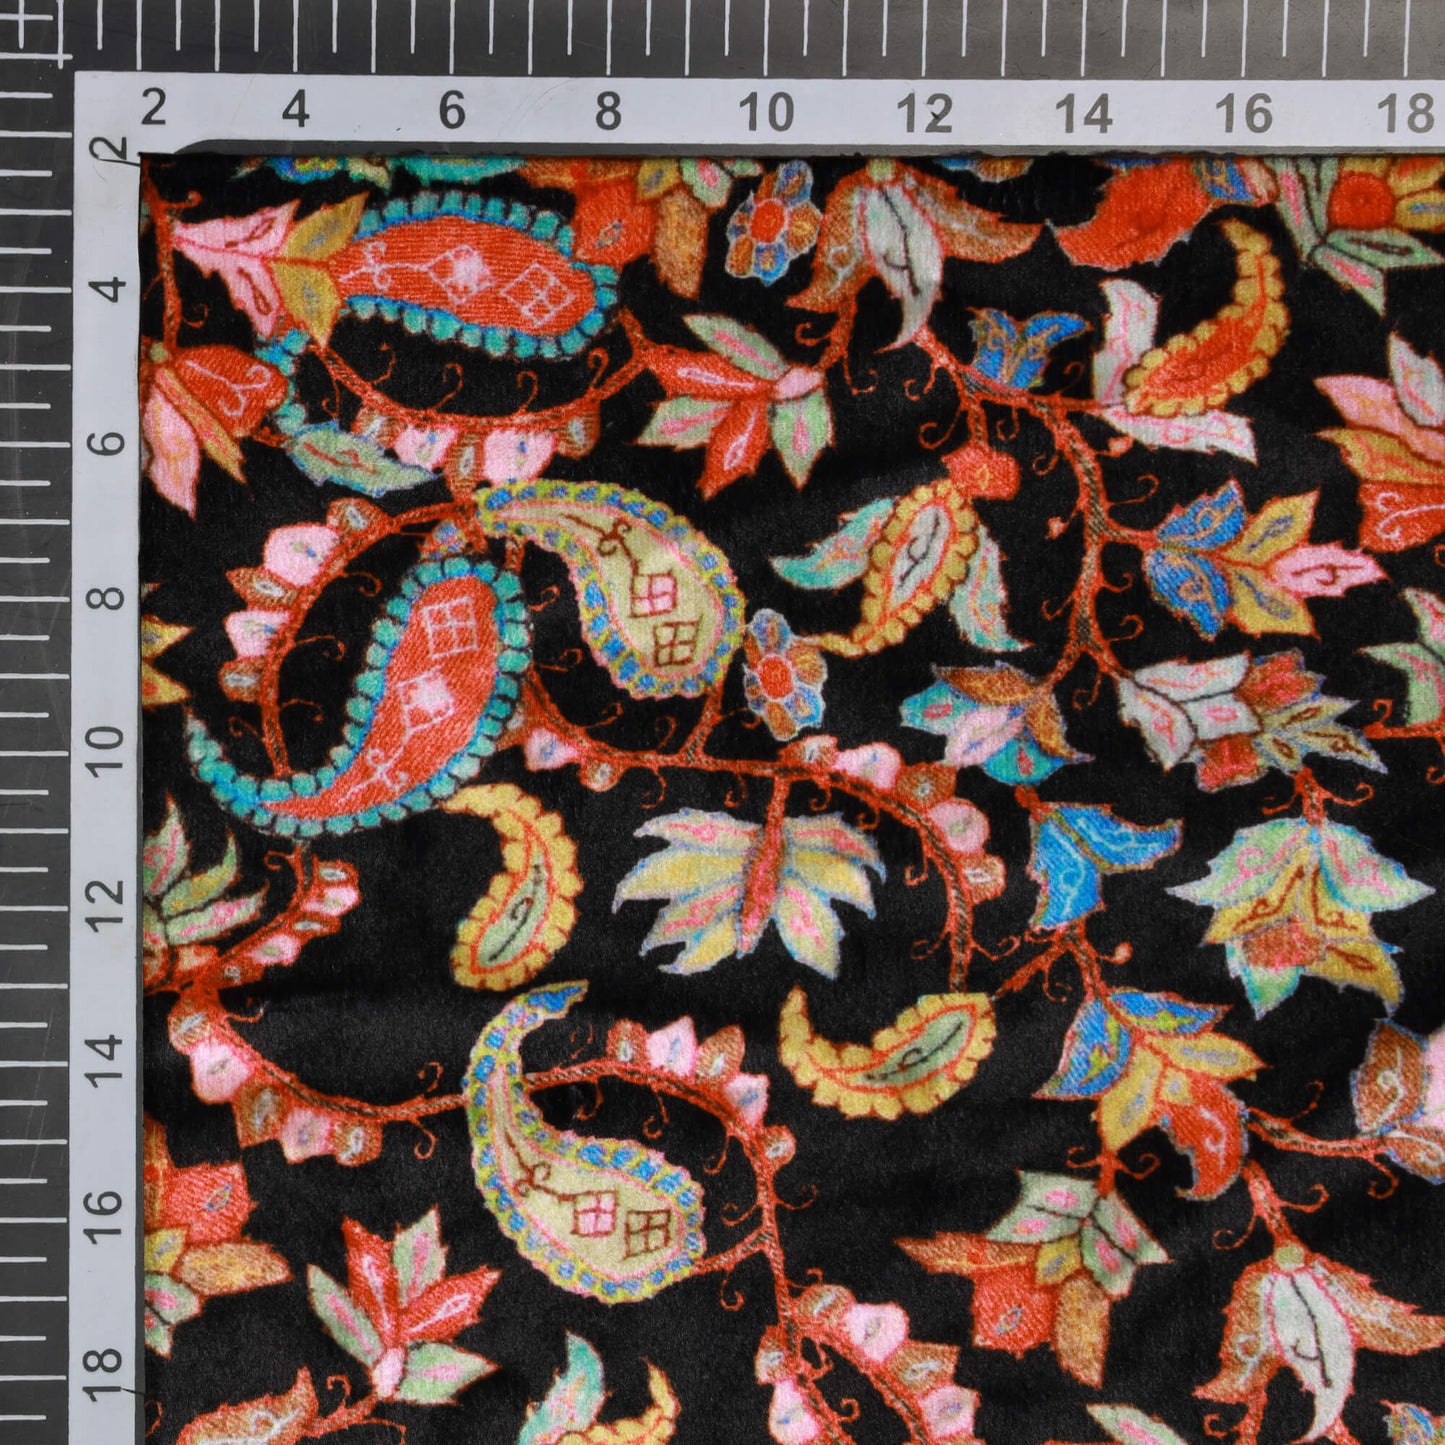 Black Leaf Pattern Digital Print Velvet Fabric (Width 54 inches)